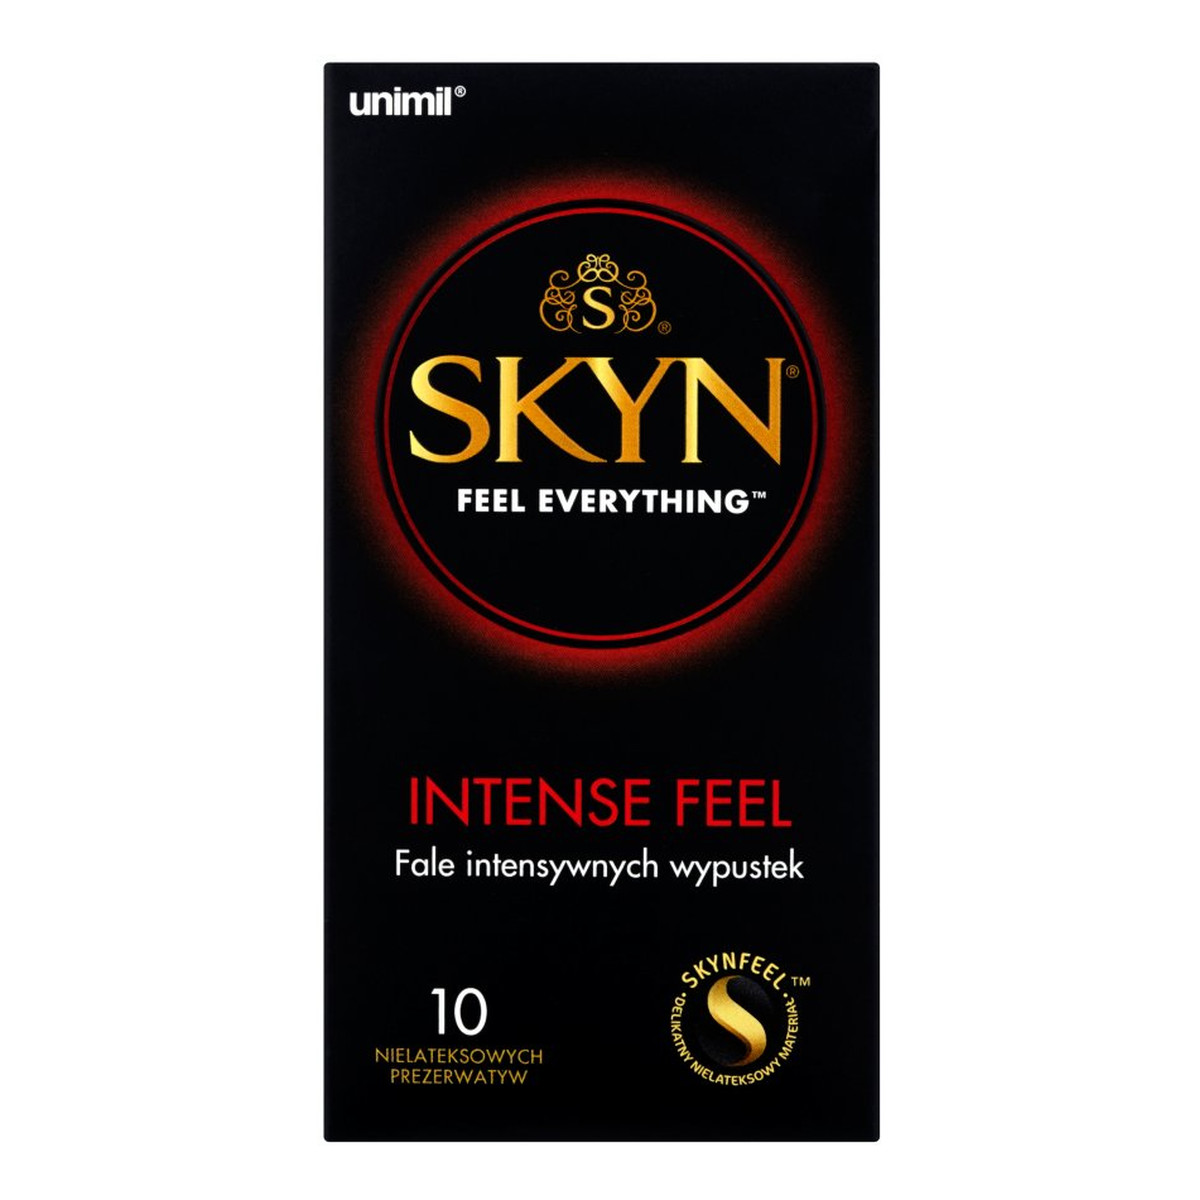 Unimil Skyn Feel Everything Intense Feel nielateksowe prezerwatywy 10szt